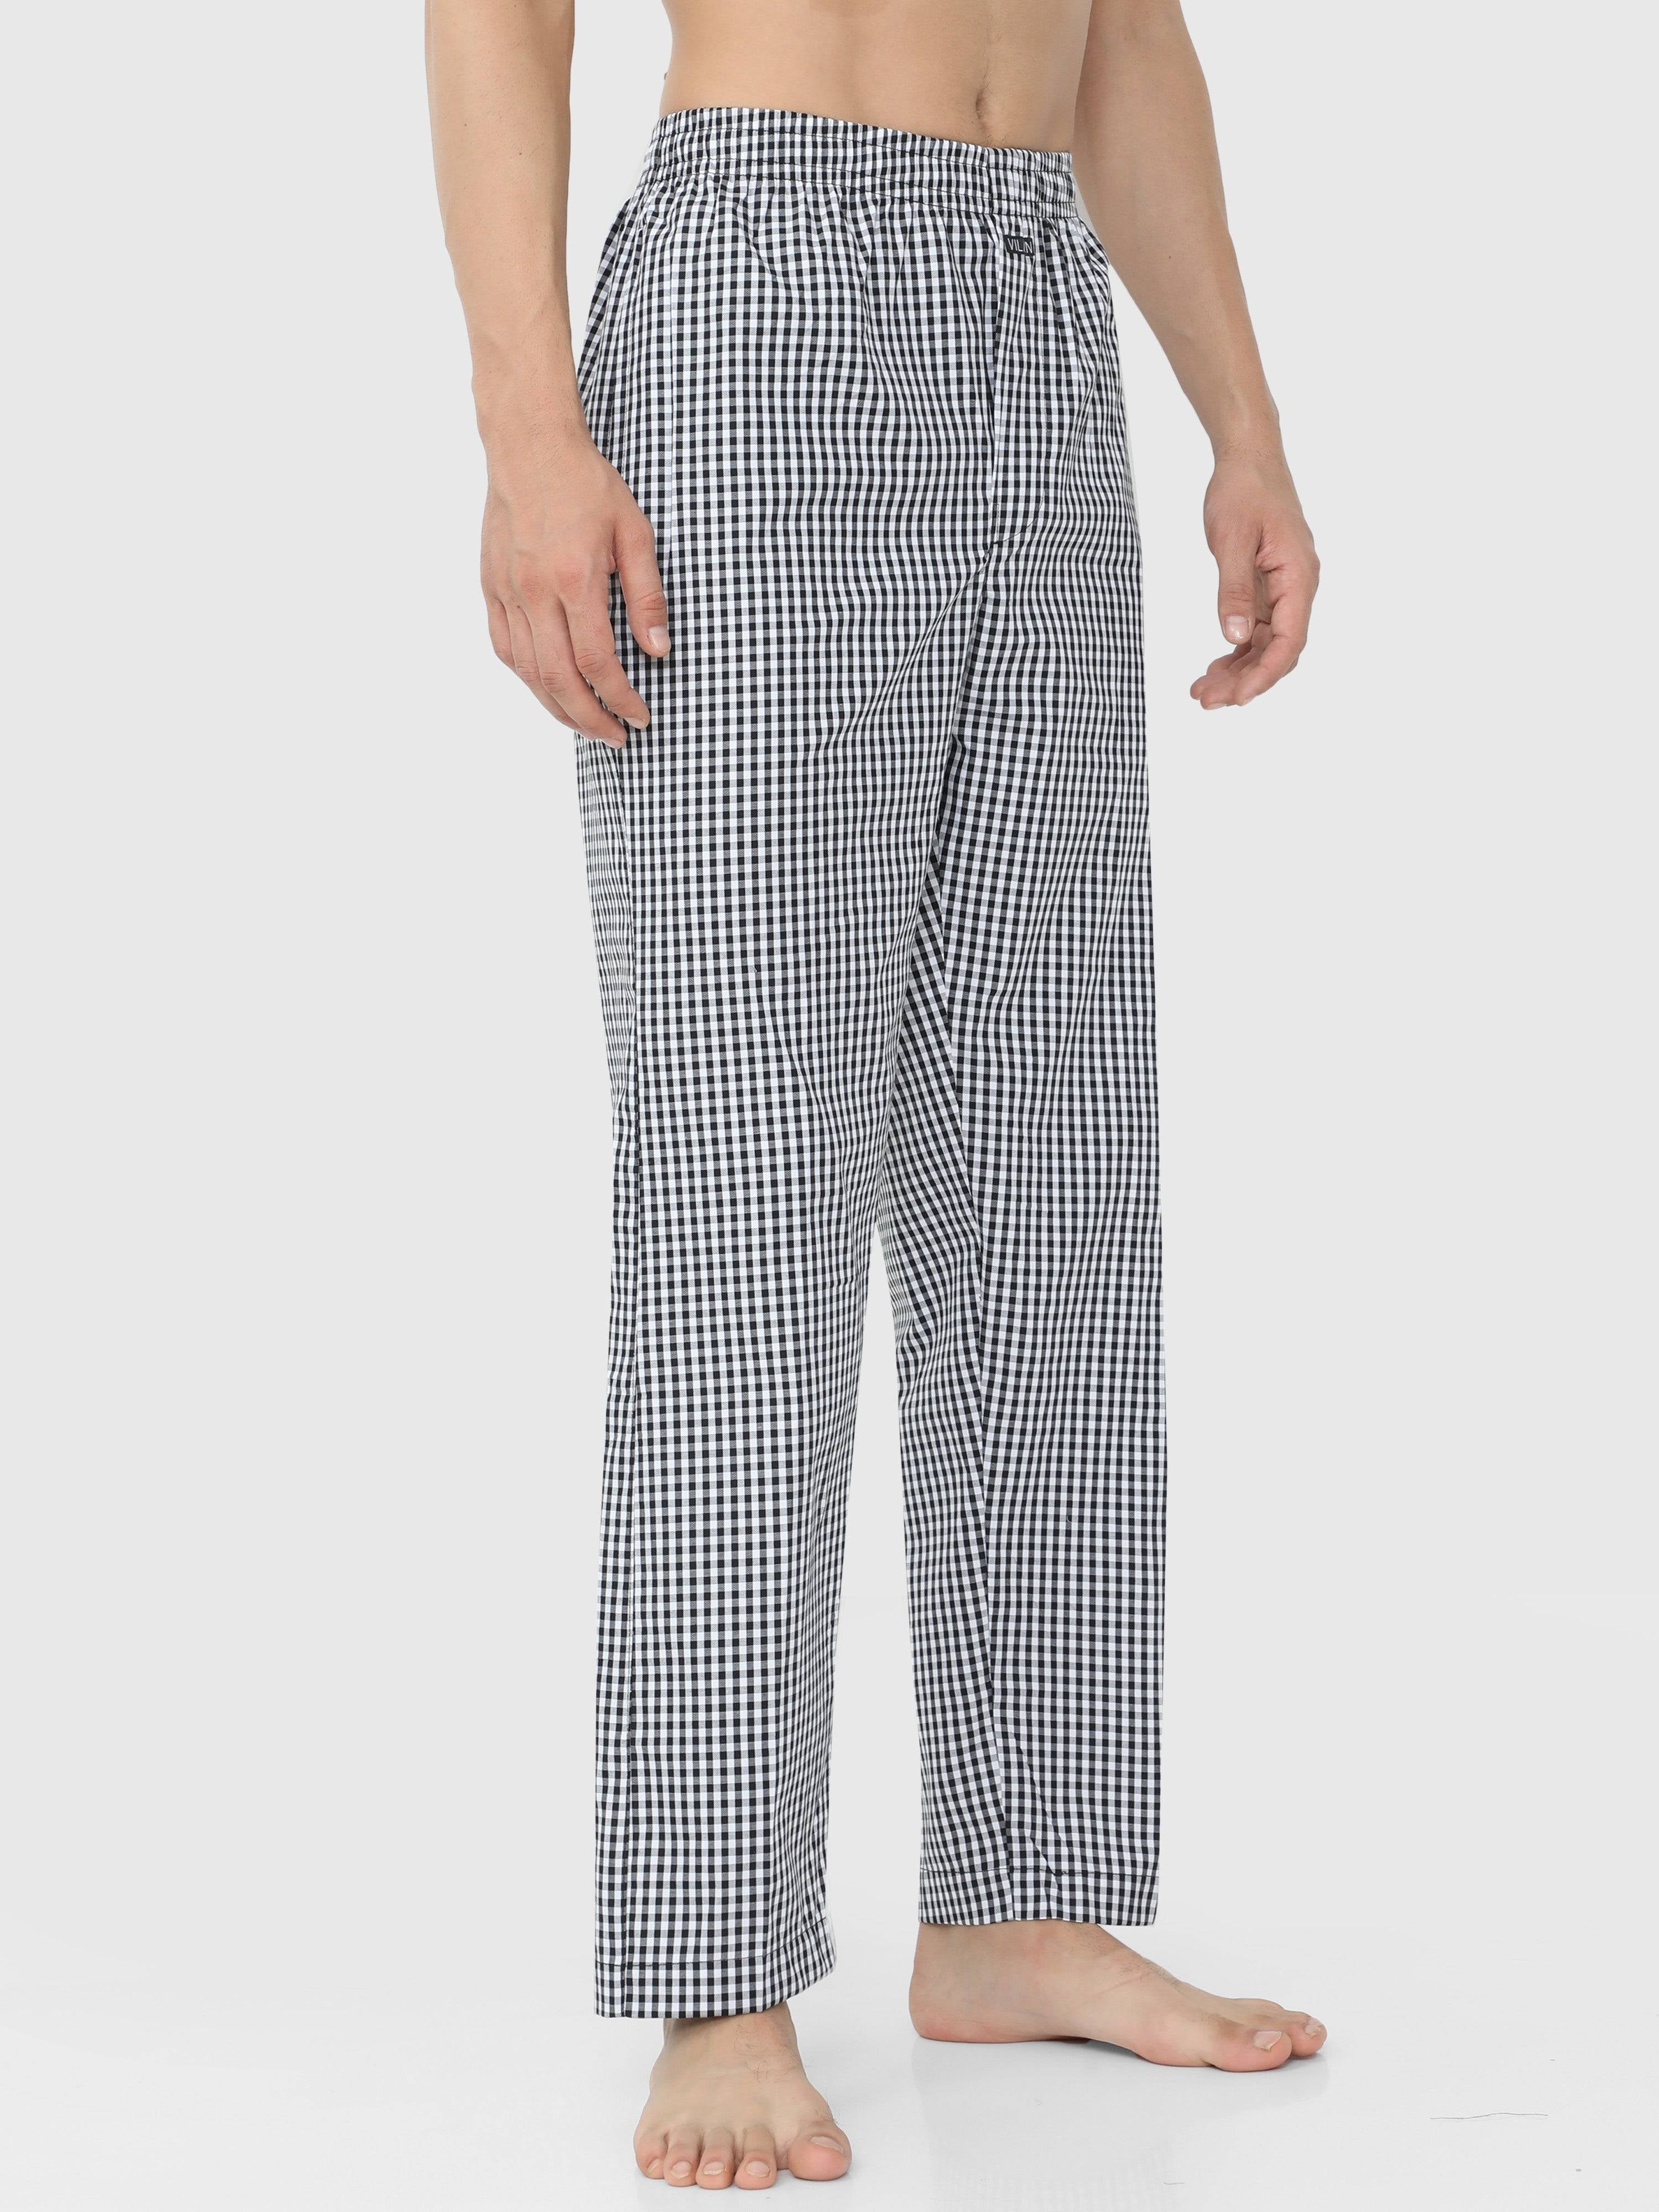 Paul Smith Check Woven Pyjama Trousers, Multi, S